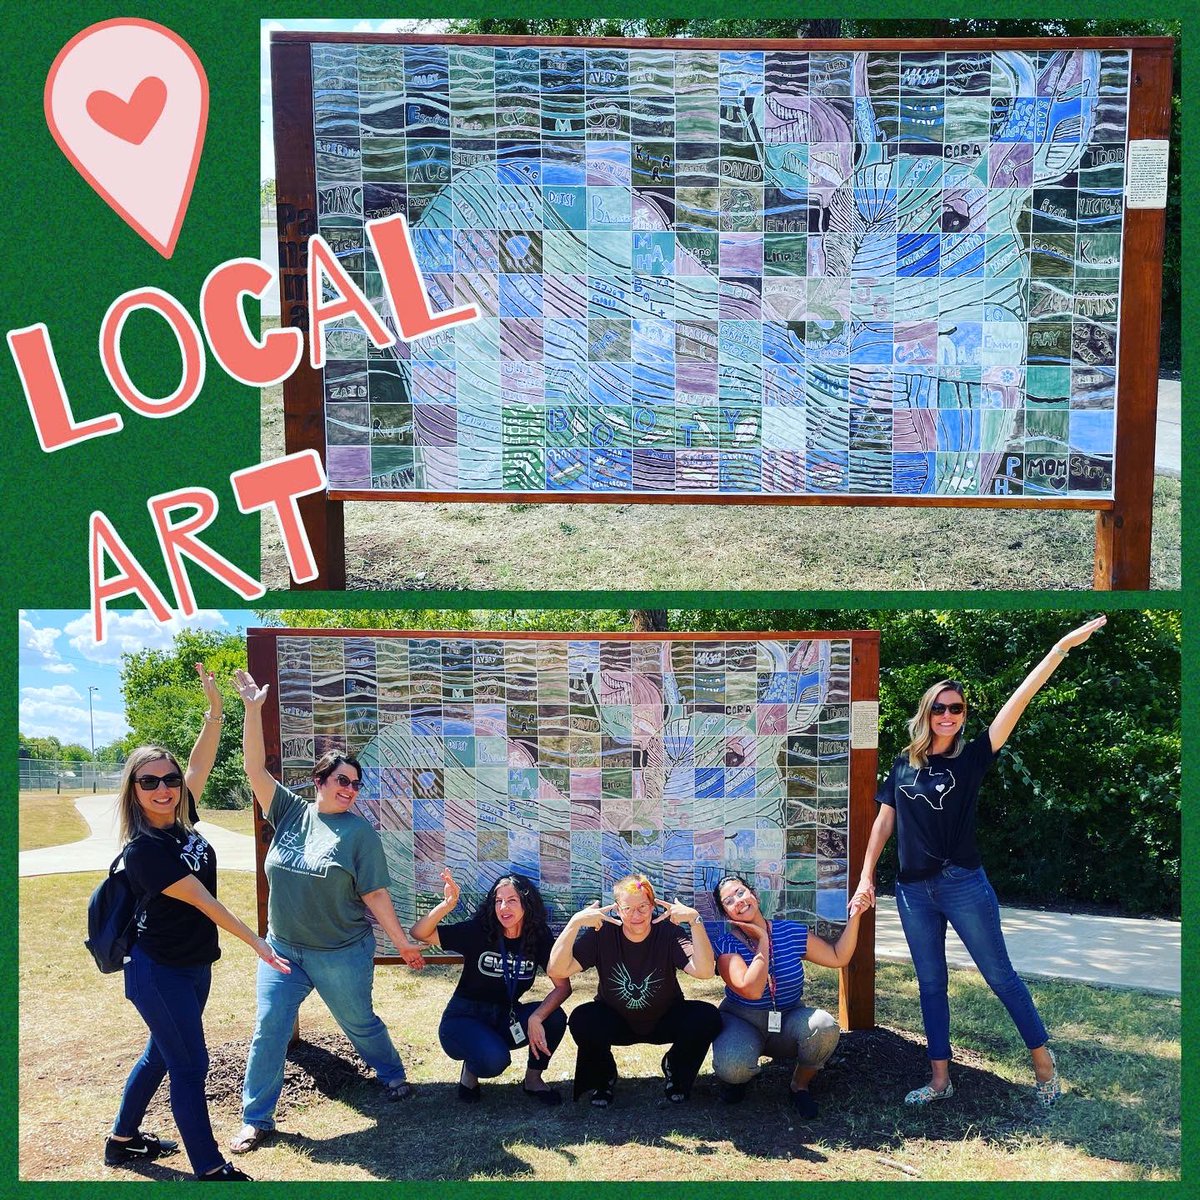 I love being with this group of creative teachers! 🫶🏼 Super excited to start our #ArtAroundTheWorld unit using local San Marcos art! 🧜🏼‍♀️ @HernandezSMCISD @SanMarcosCISD @SMCISDFineArts @DZdiamondsART @jessicarteacher @CrockettArtSMTX @TravisTexansArt @DZdiamondsART @bowiechamps